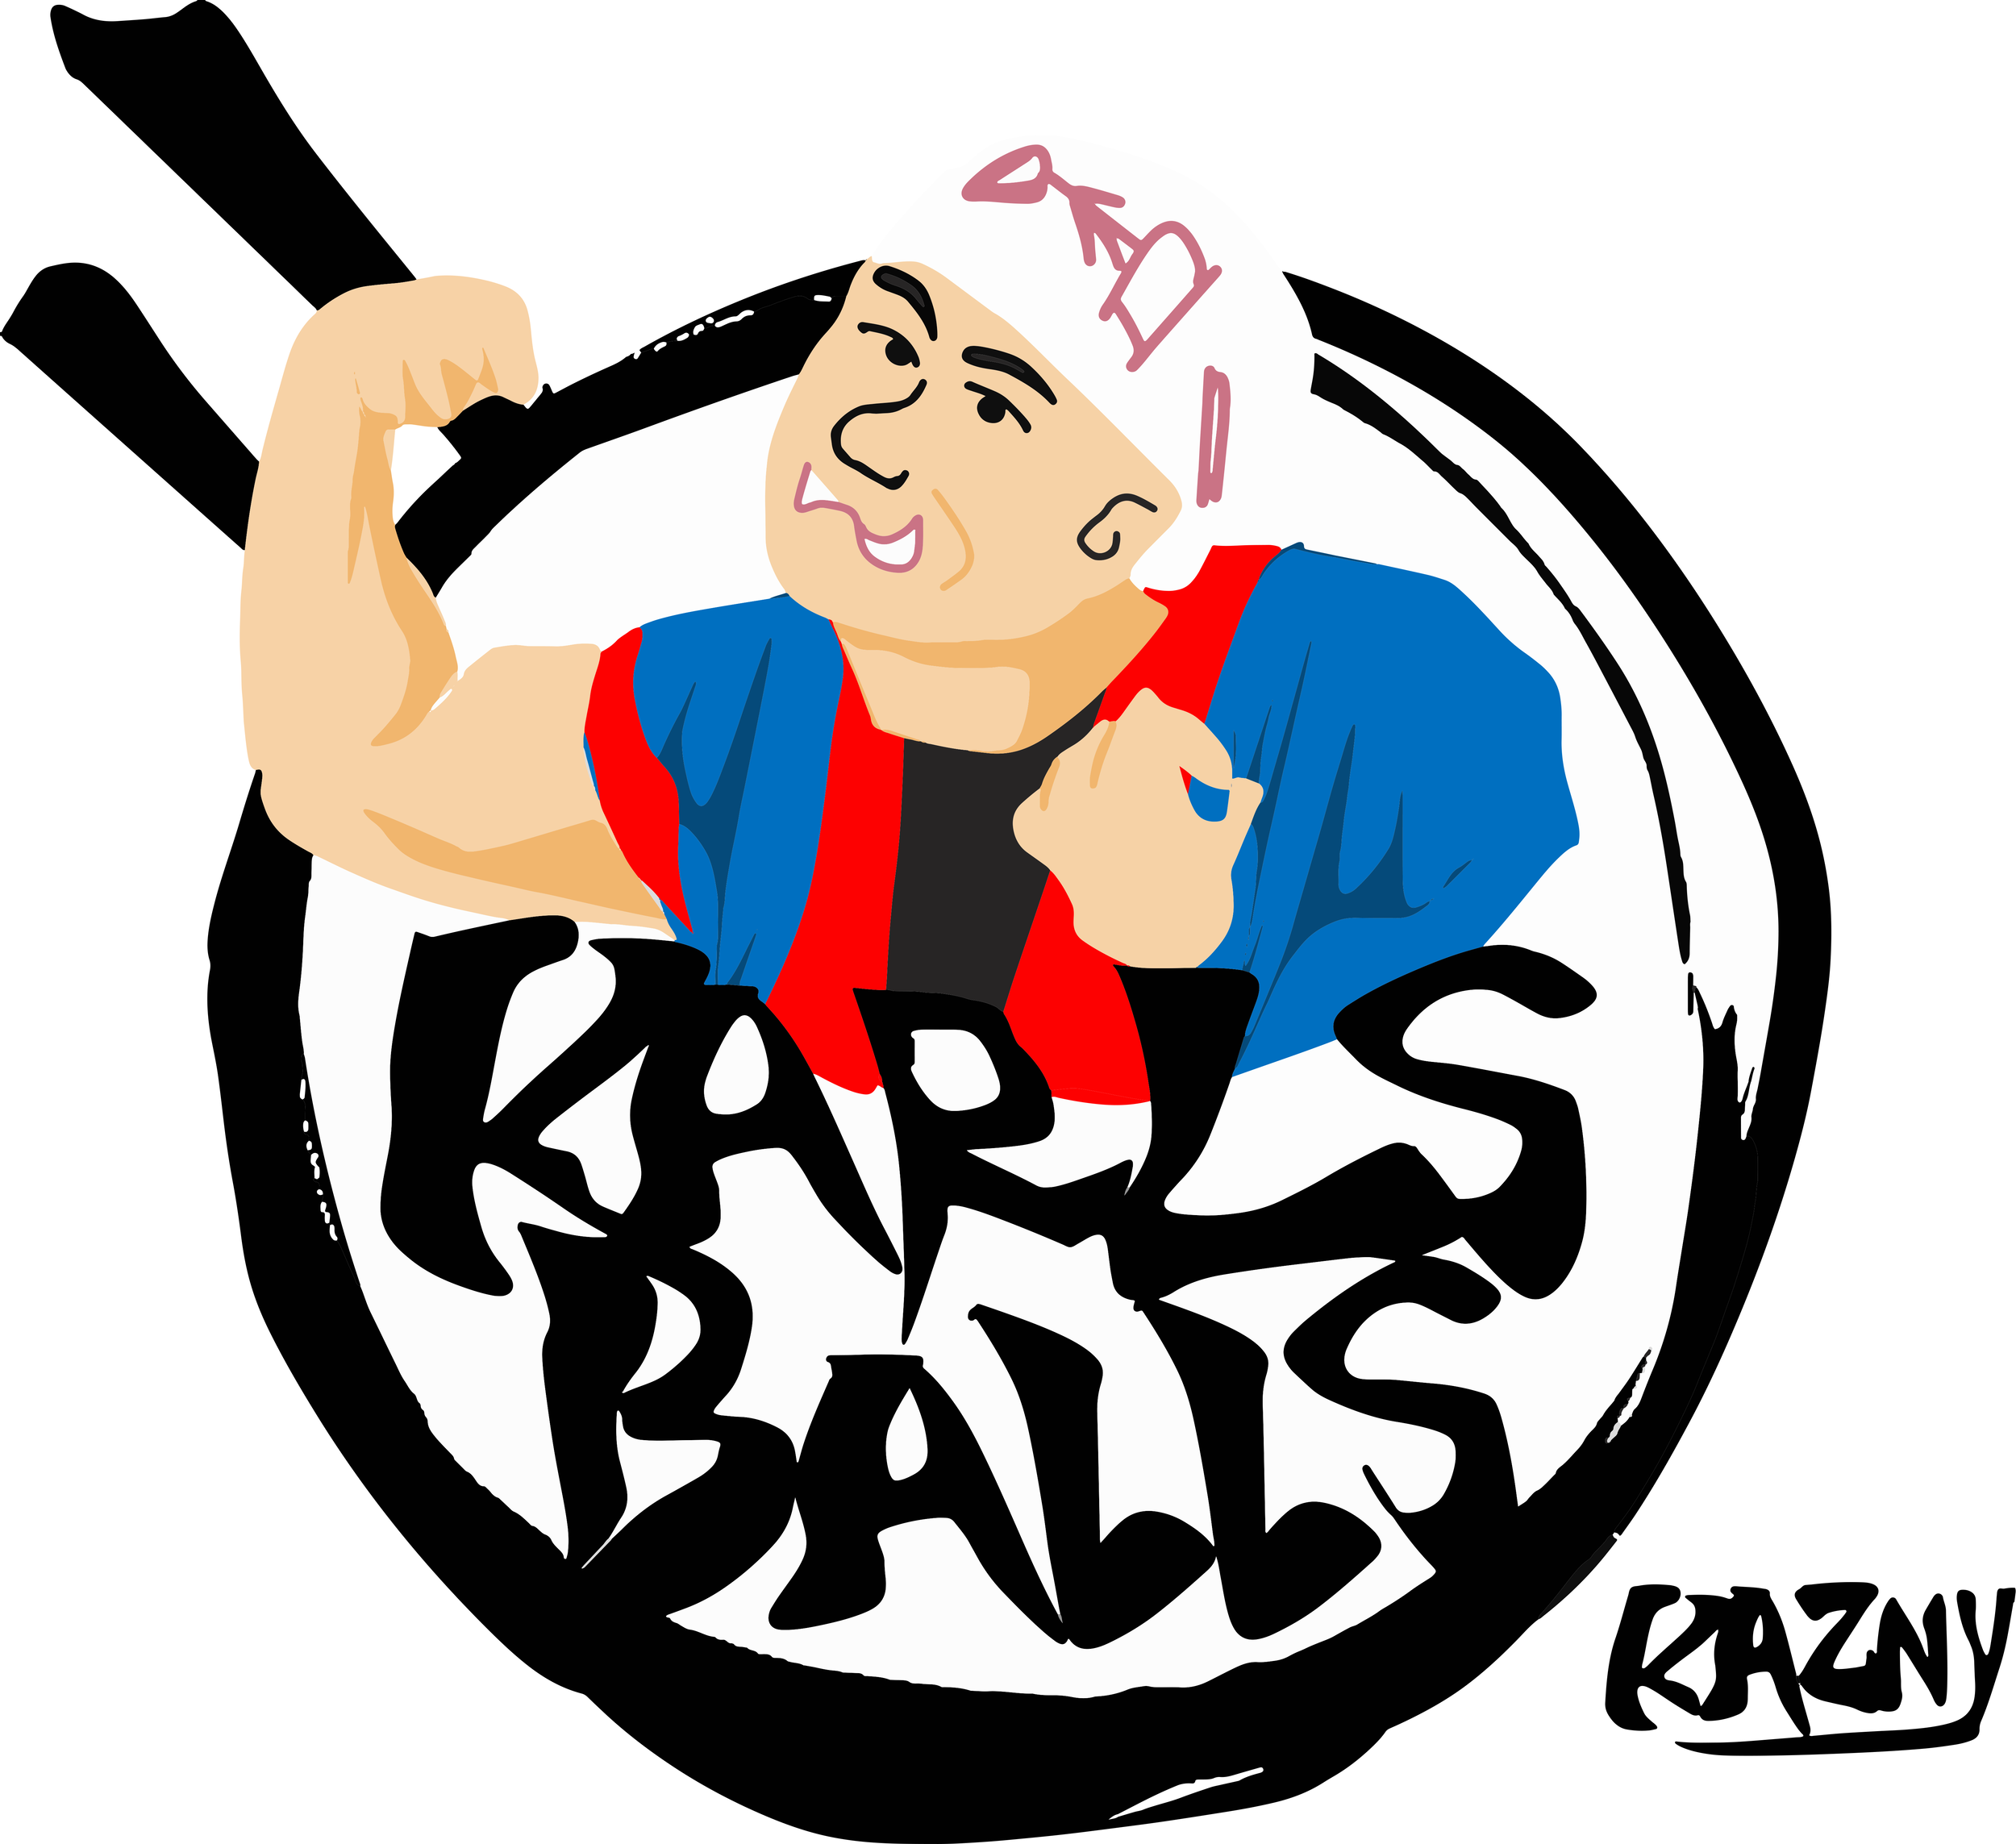 Karls Balls OFFICIAL LOGO (VECTOR FILE).png